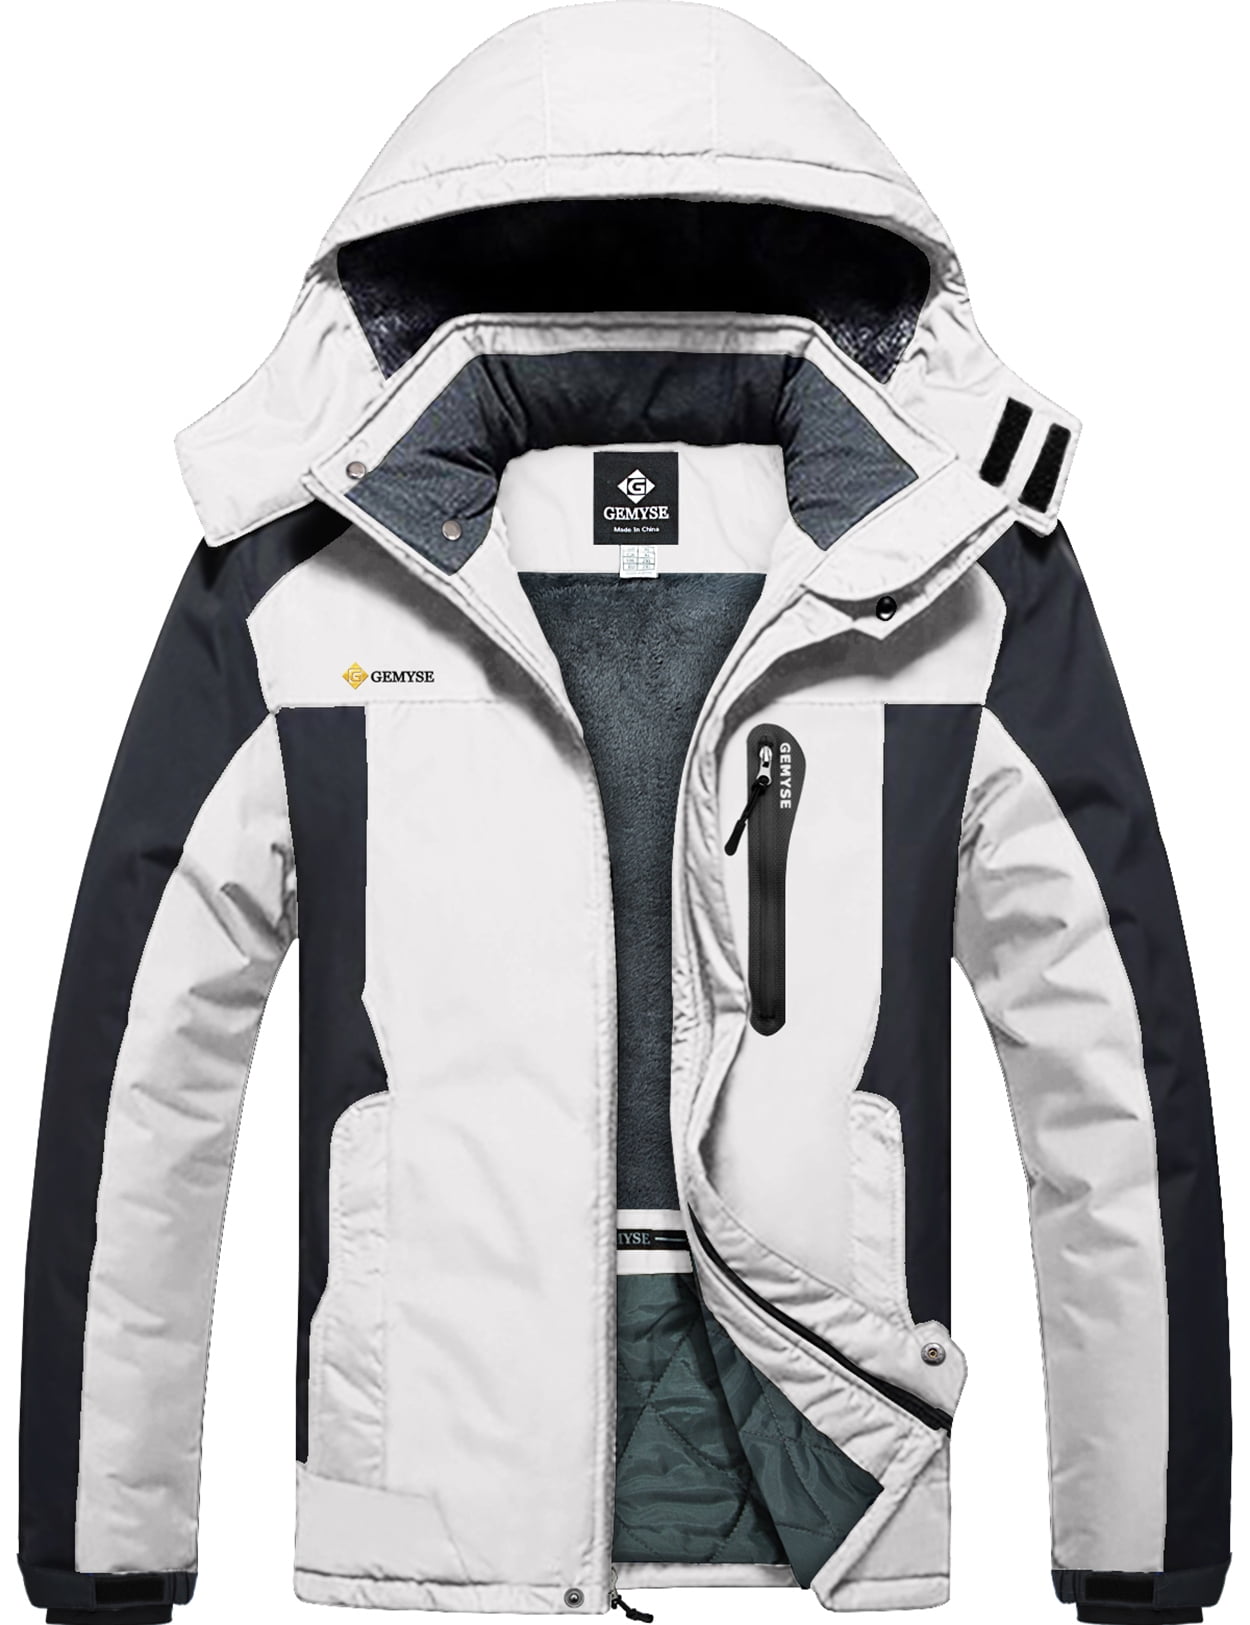 GEMYSE Boy's Waterproof Ski Snow Jacket Fleece Windproof Winter Jacket with Hood 